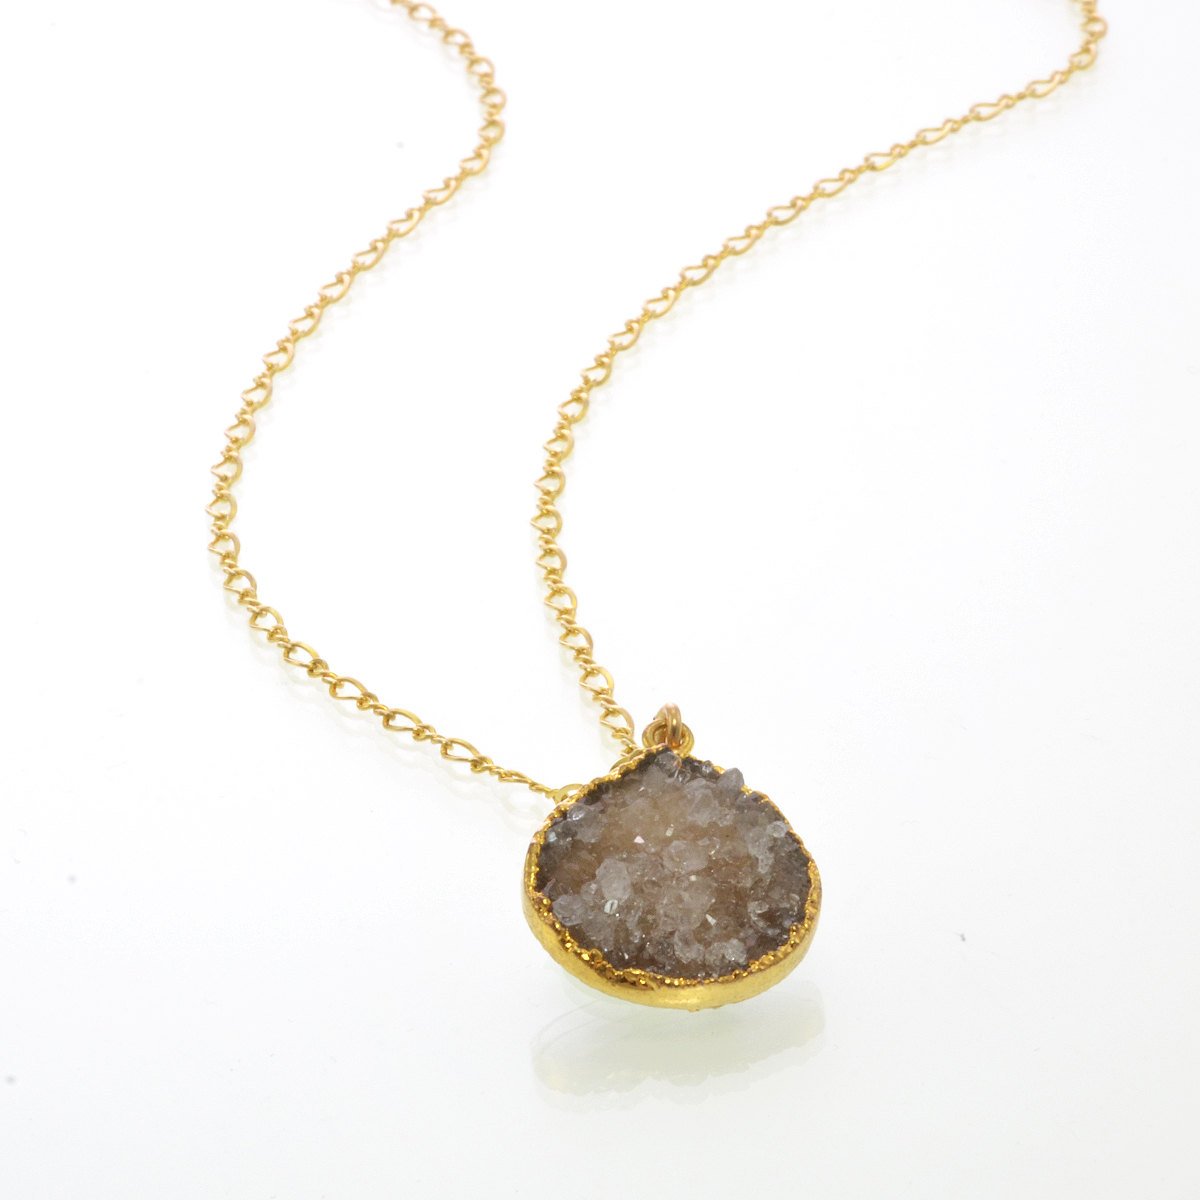 Druzy Necklace - Geode Necklace - Grey Druzy Necklaces - Tear Drop Necklace - Druzy Gold Filled Necklace - Genuine Simple Gemstone Necklace